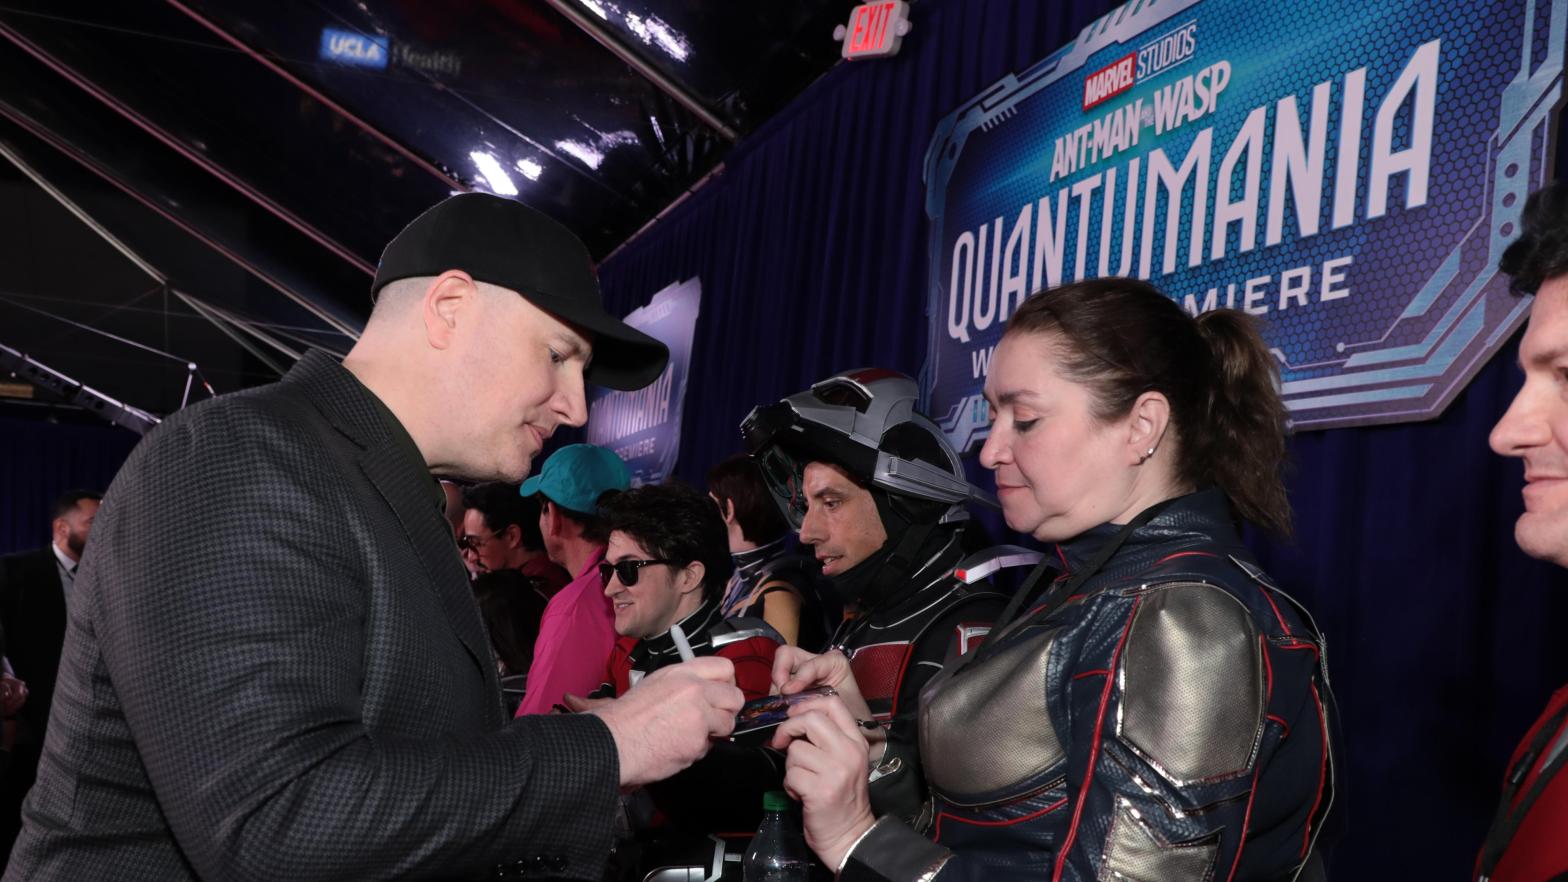 Kevin Feige signing autographs at the Ant-Man 3 premiere. (Image: Alex J. Berliner/ABImages/Disney)